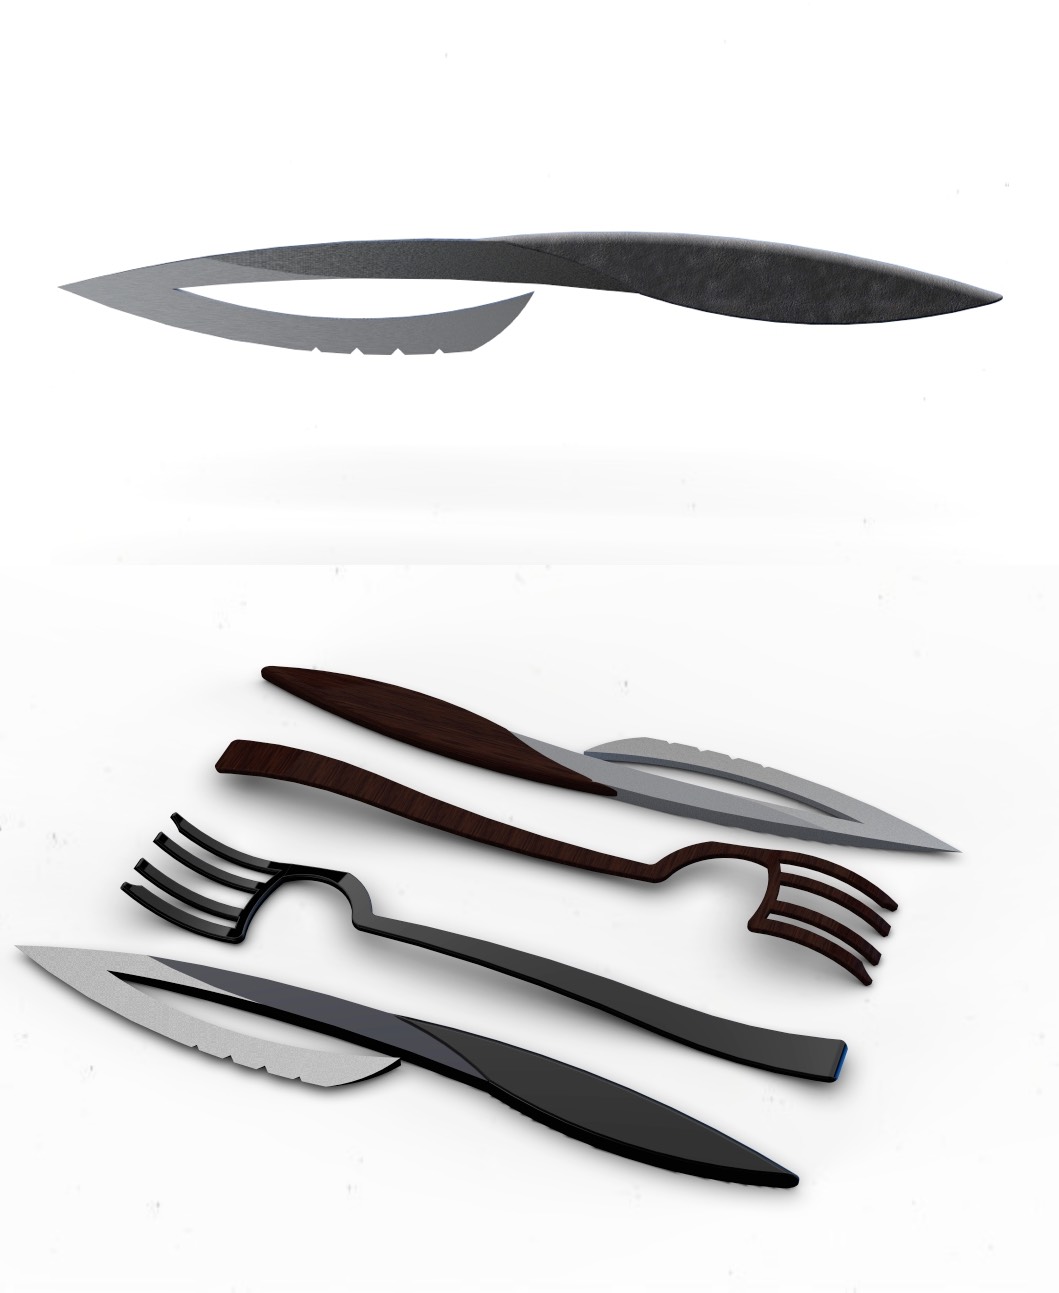 notifikation dollar solopgang knife-and-fork | Interior Design Ideas